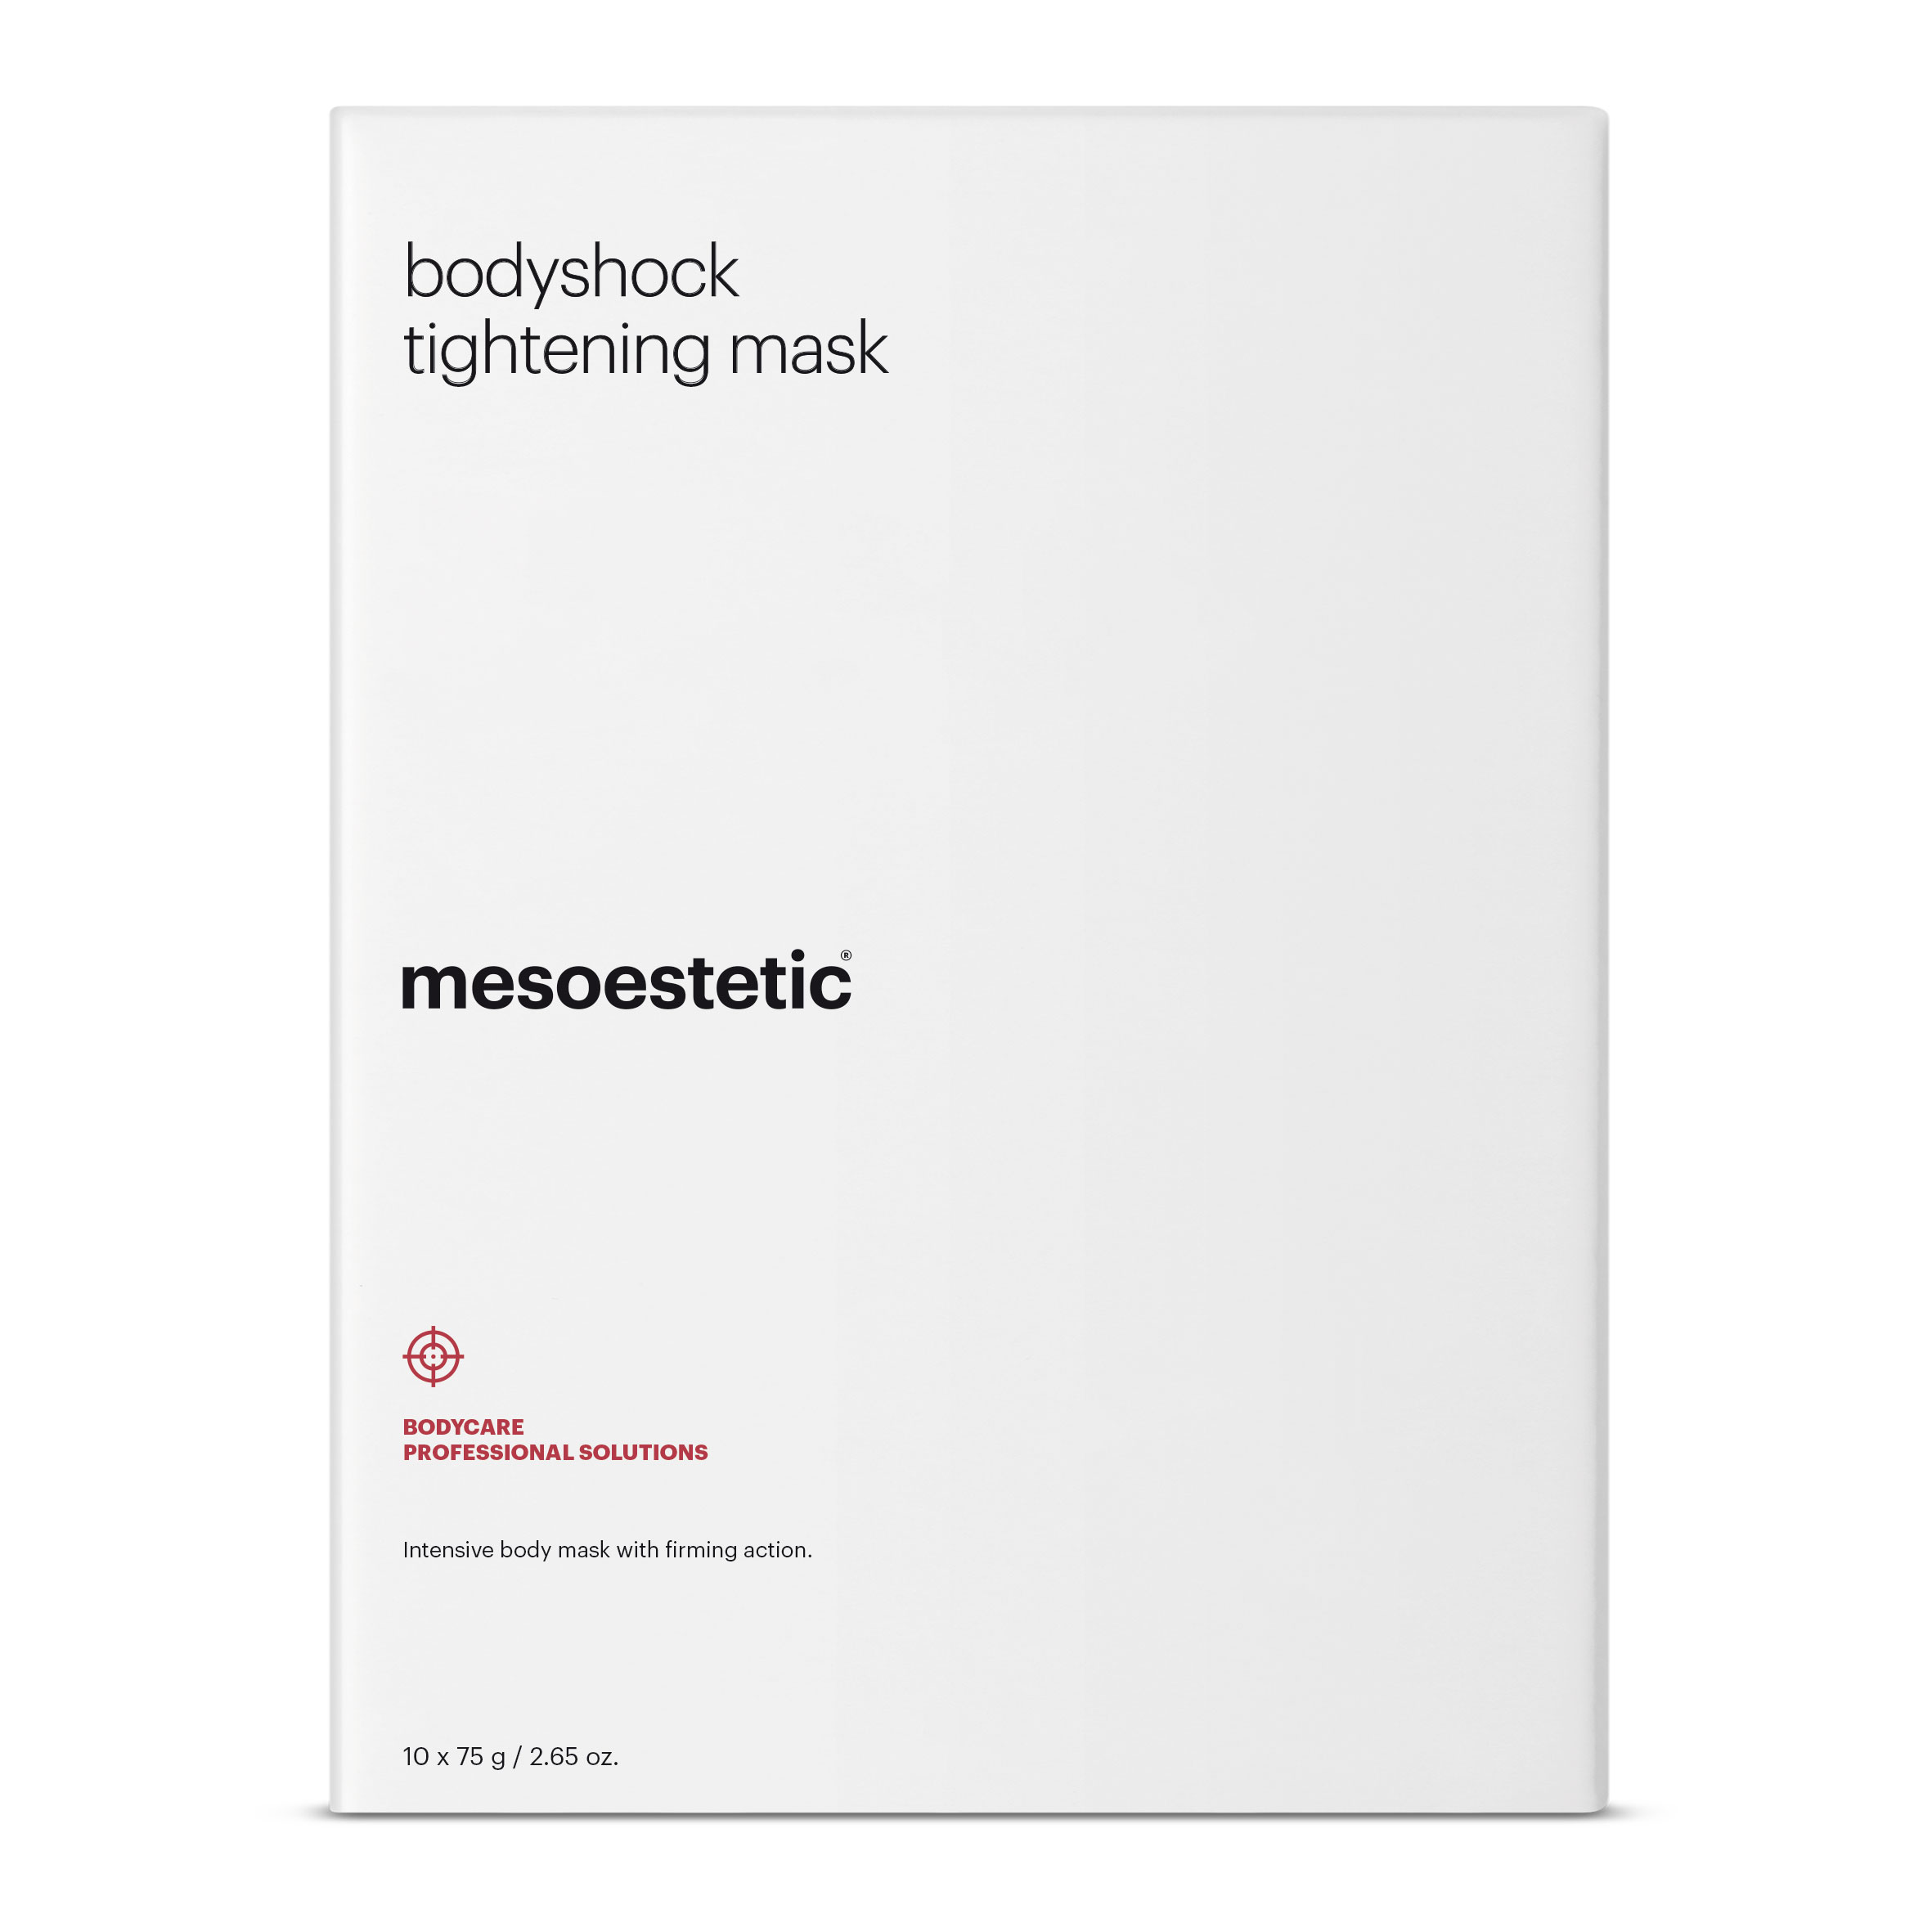 Secundario Bodyshock Tightening Mask RGB 72ppp